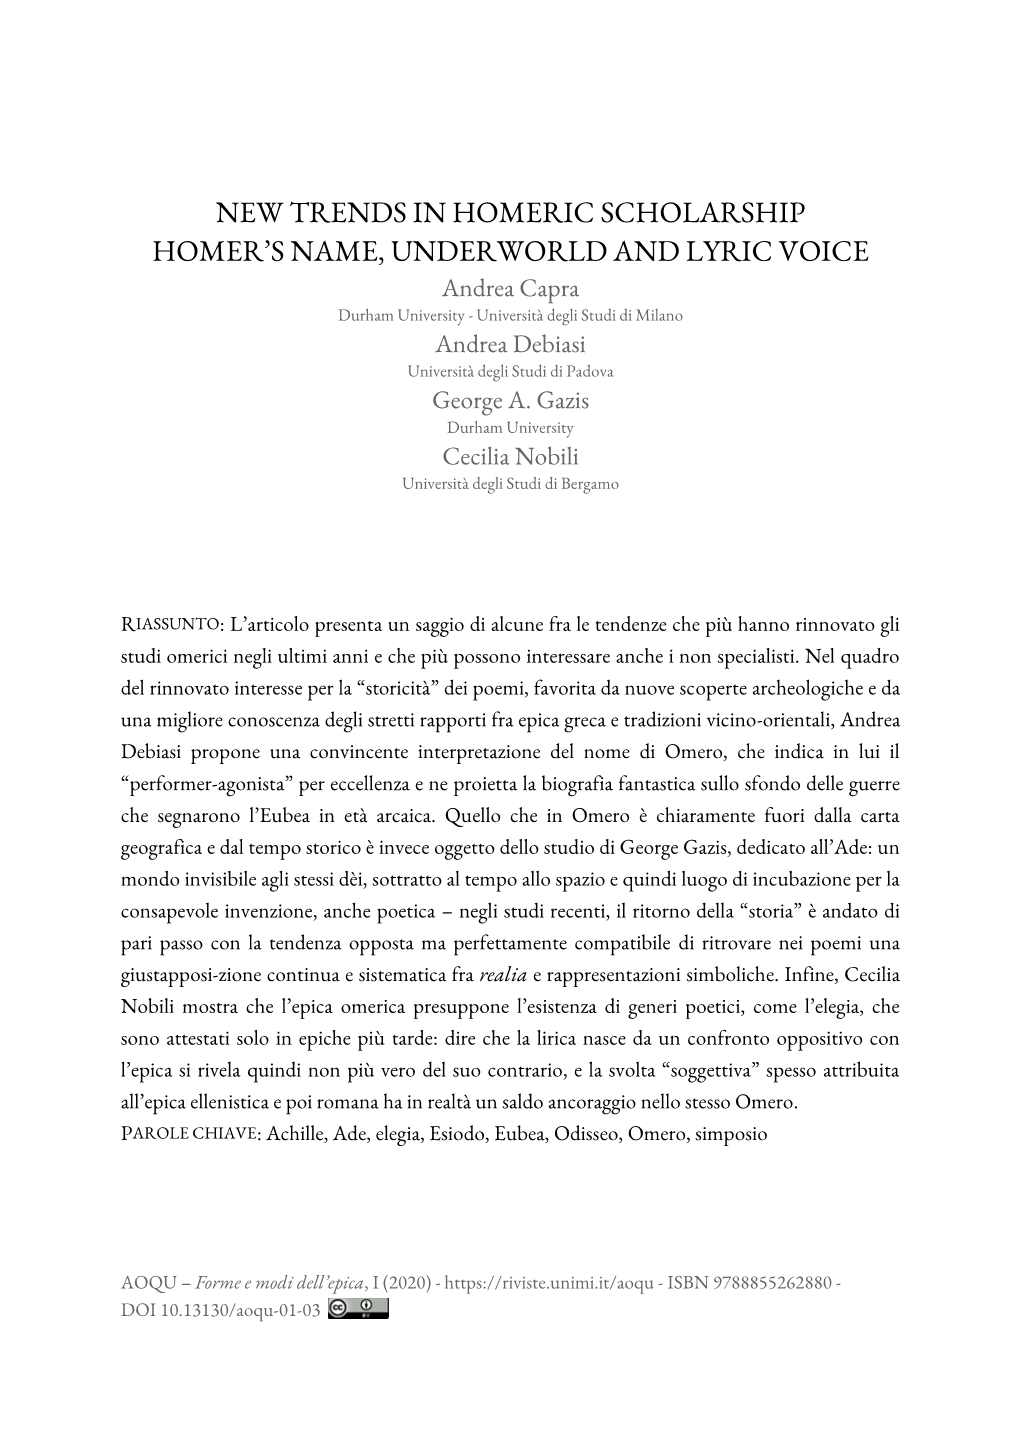 New Trends in Homeric Scholarship